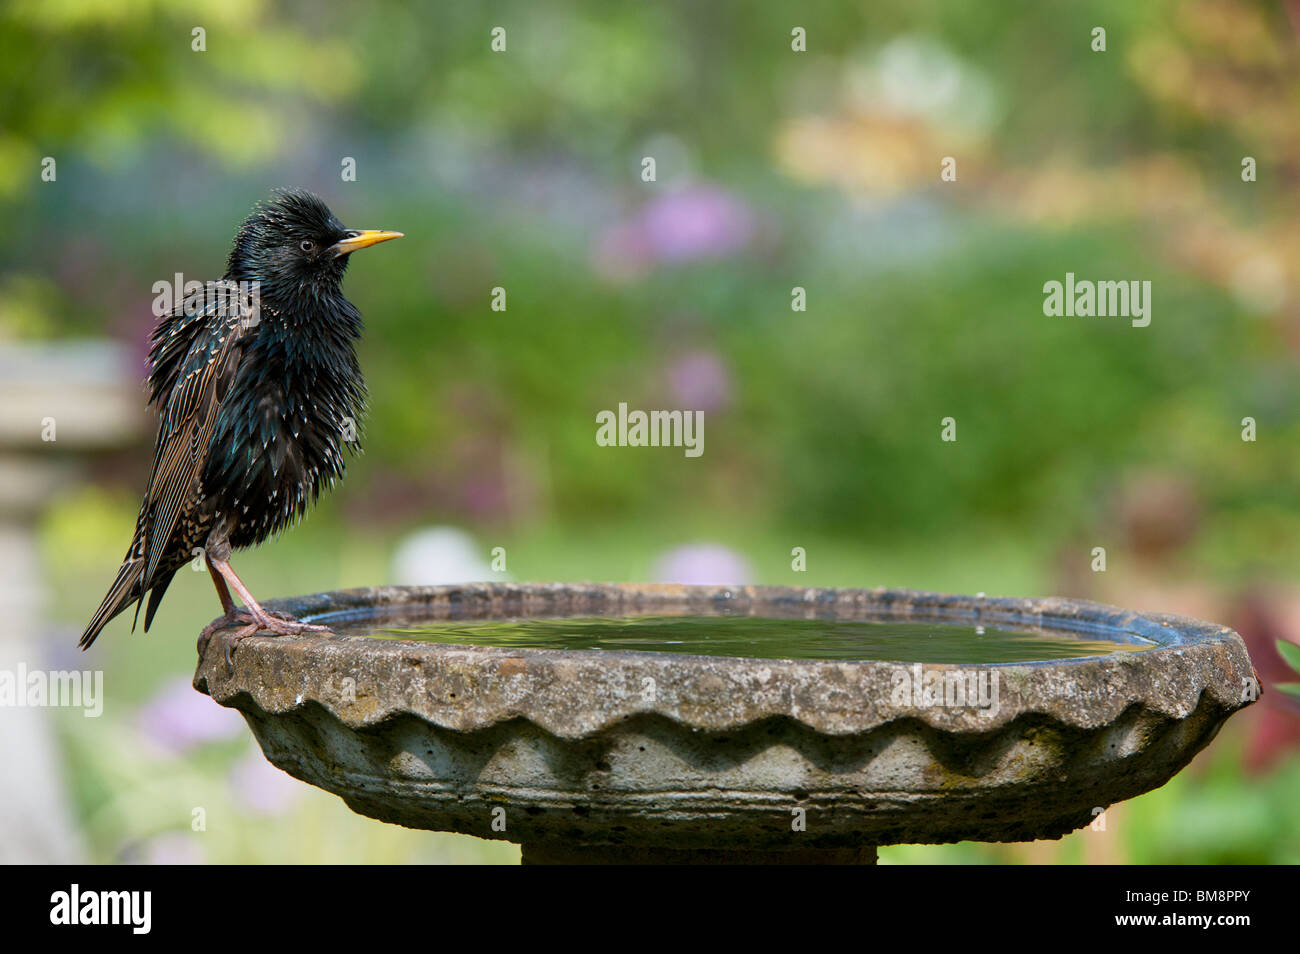 Sturnus vulgaris. Starling on a bird bath Stock Photo